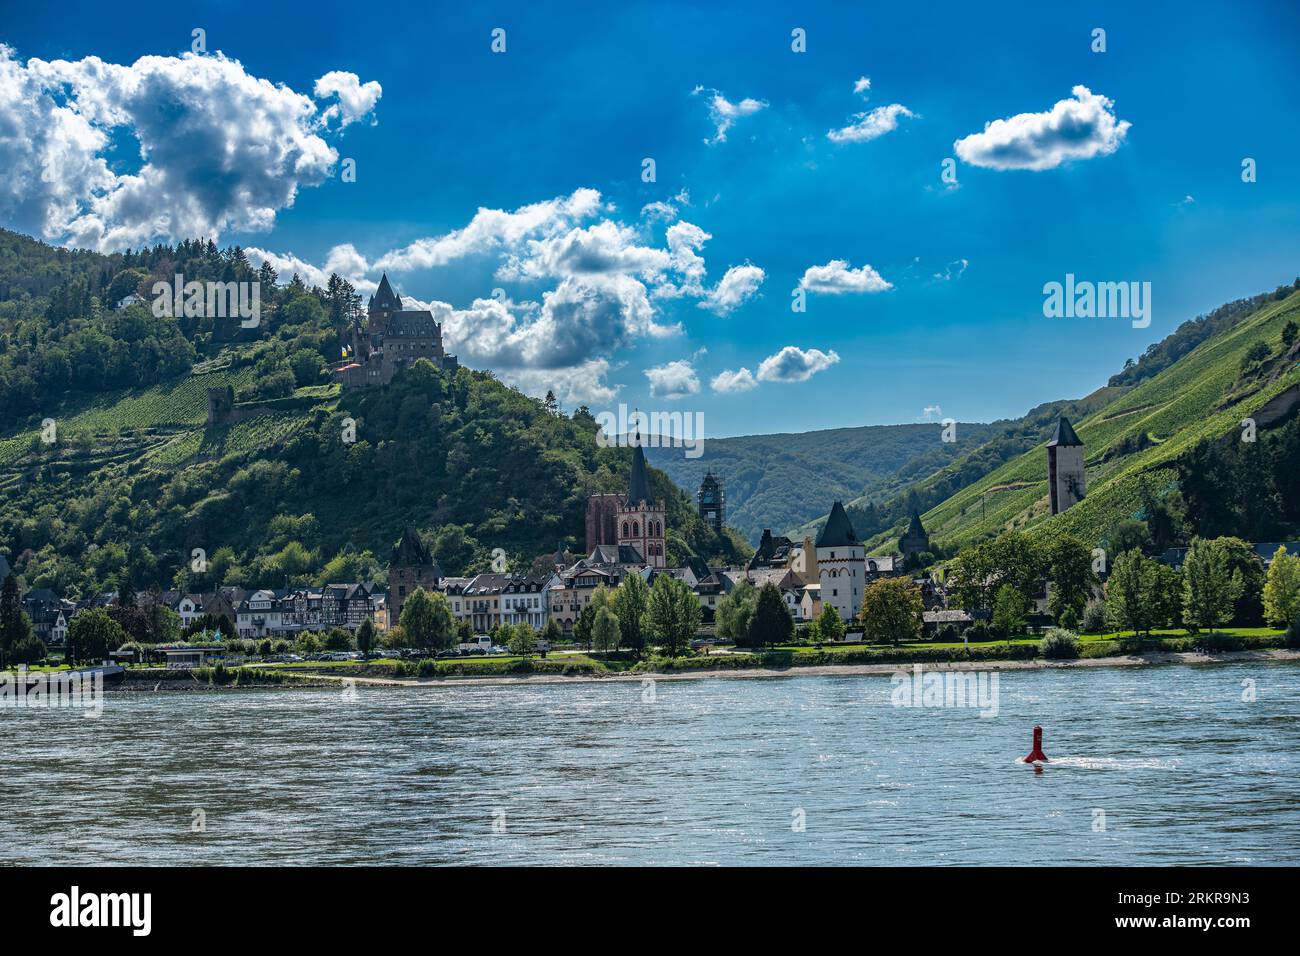 Panorama de Bacharach am Rhein, Allemagne Banque D'Images